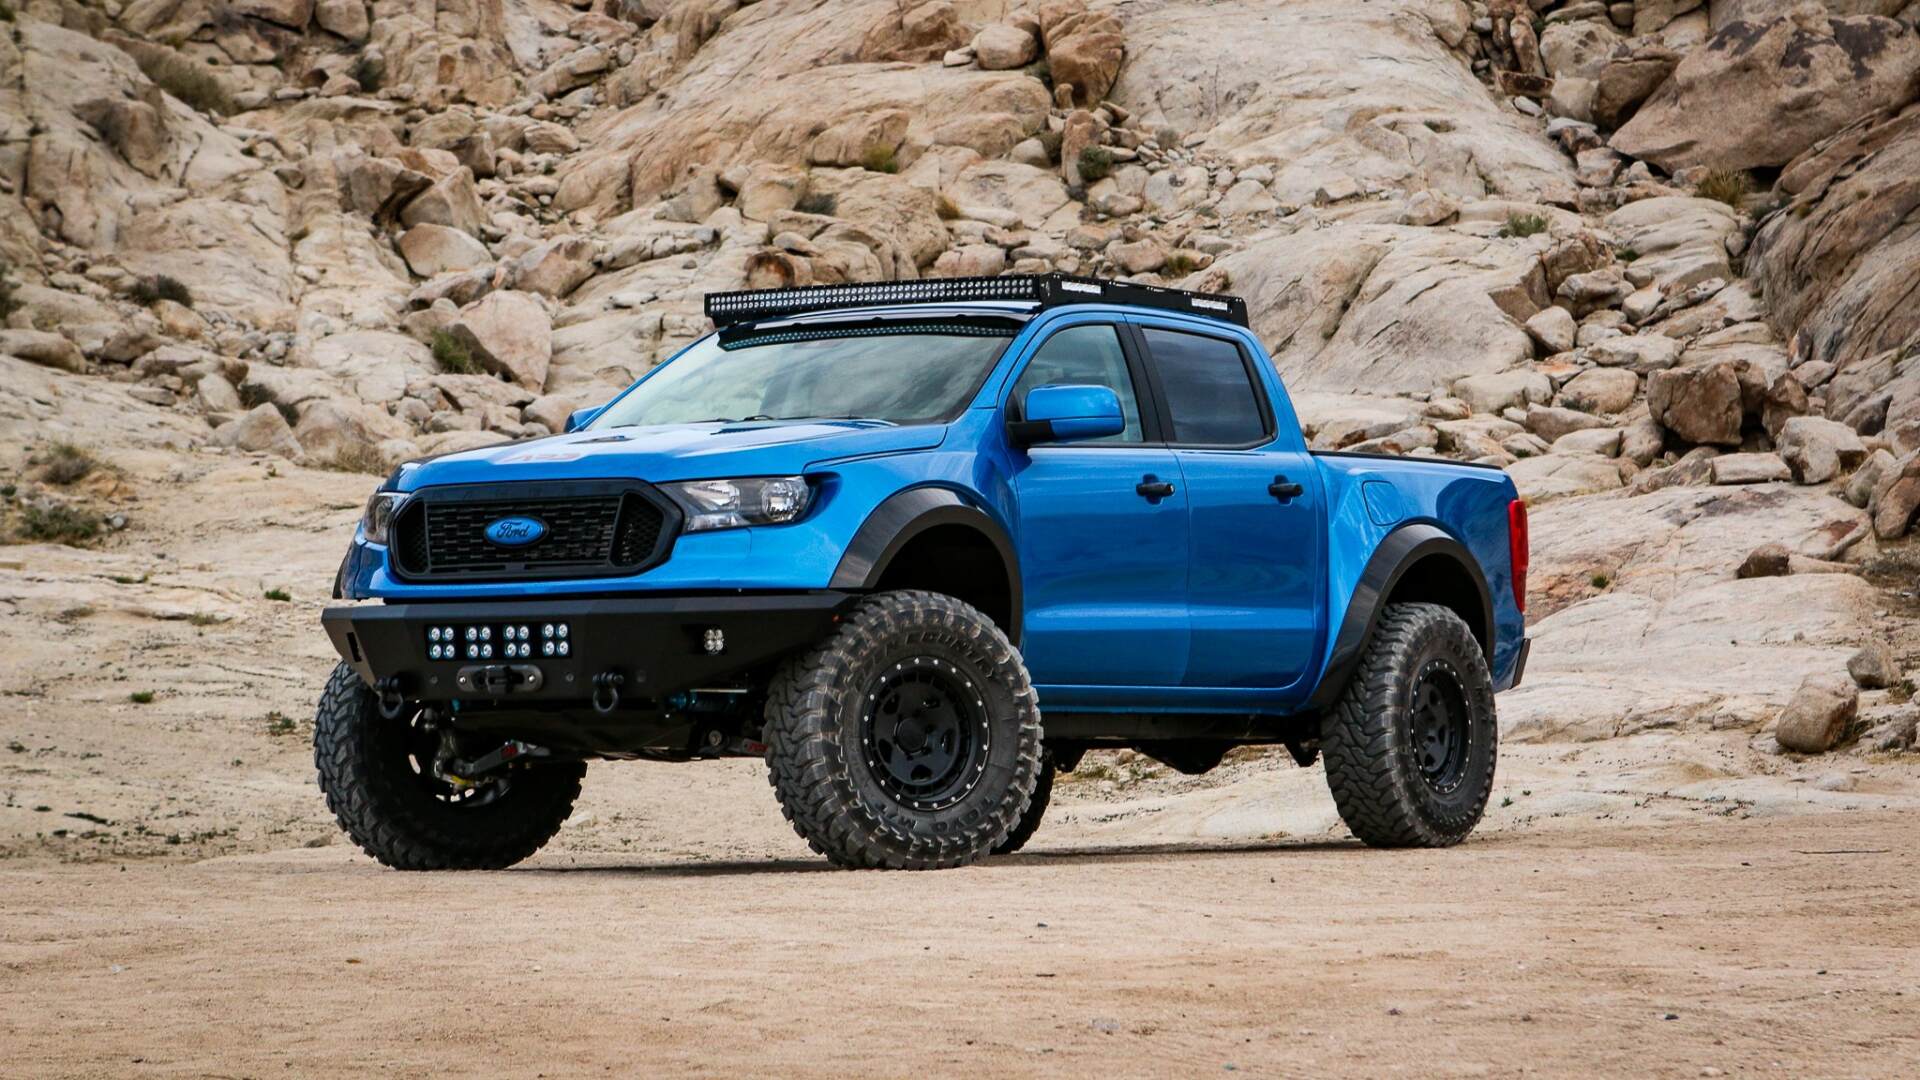 A Blue Ford Ranger